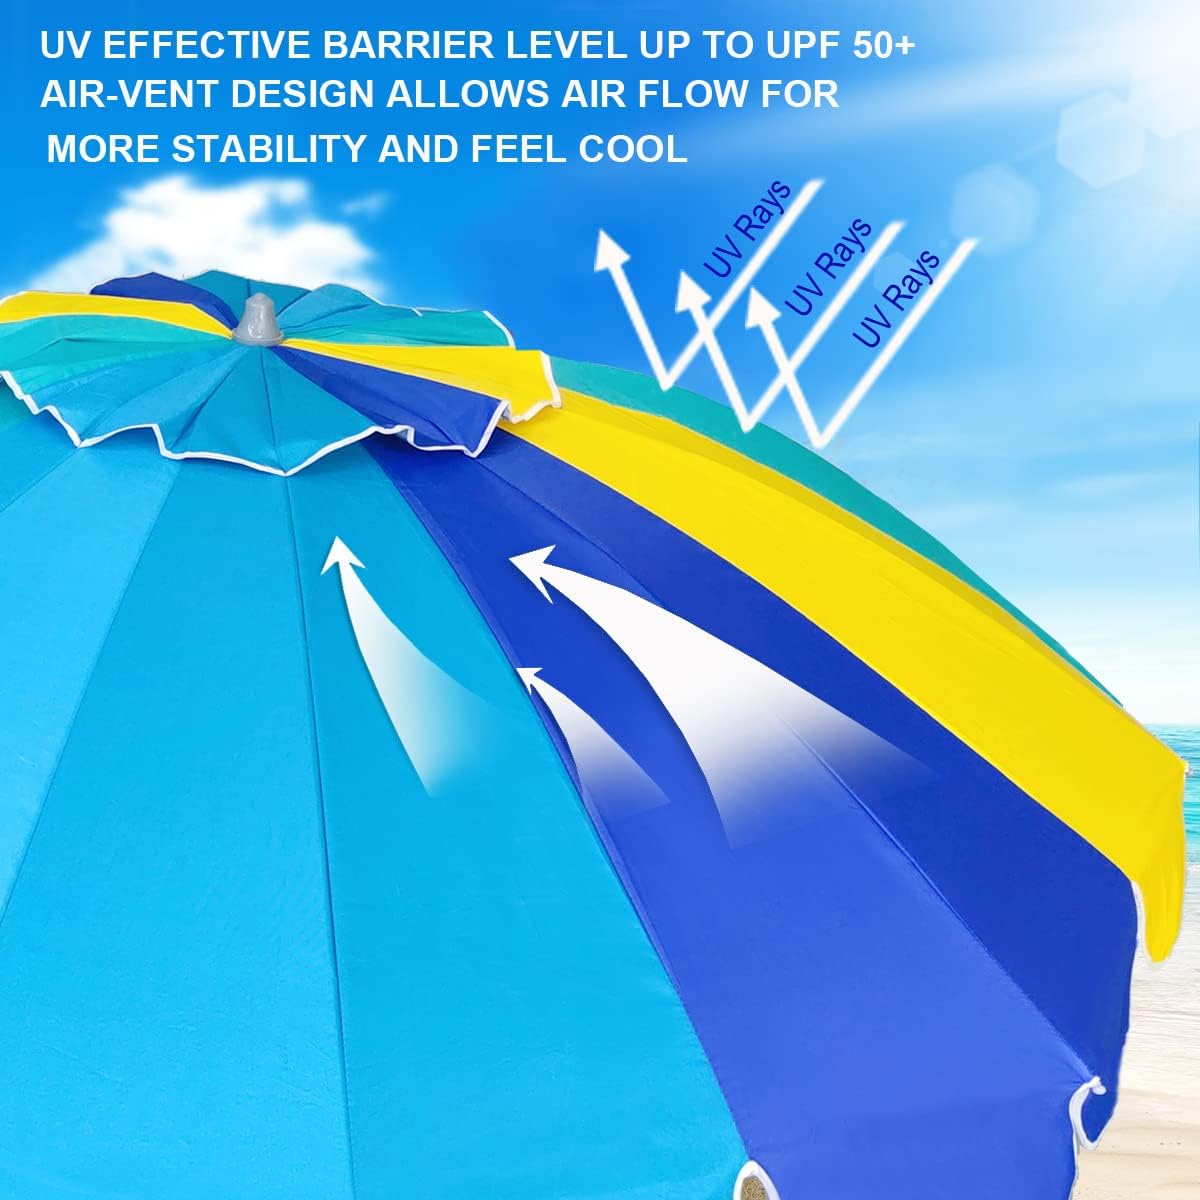 AMMSUN 7.5ft Beach Umbrella with sand anchor Multicolor Blue